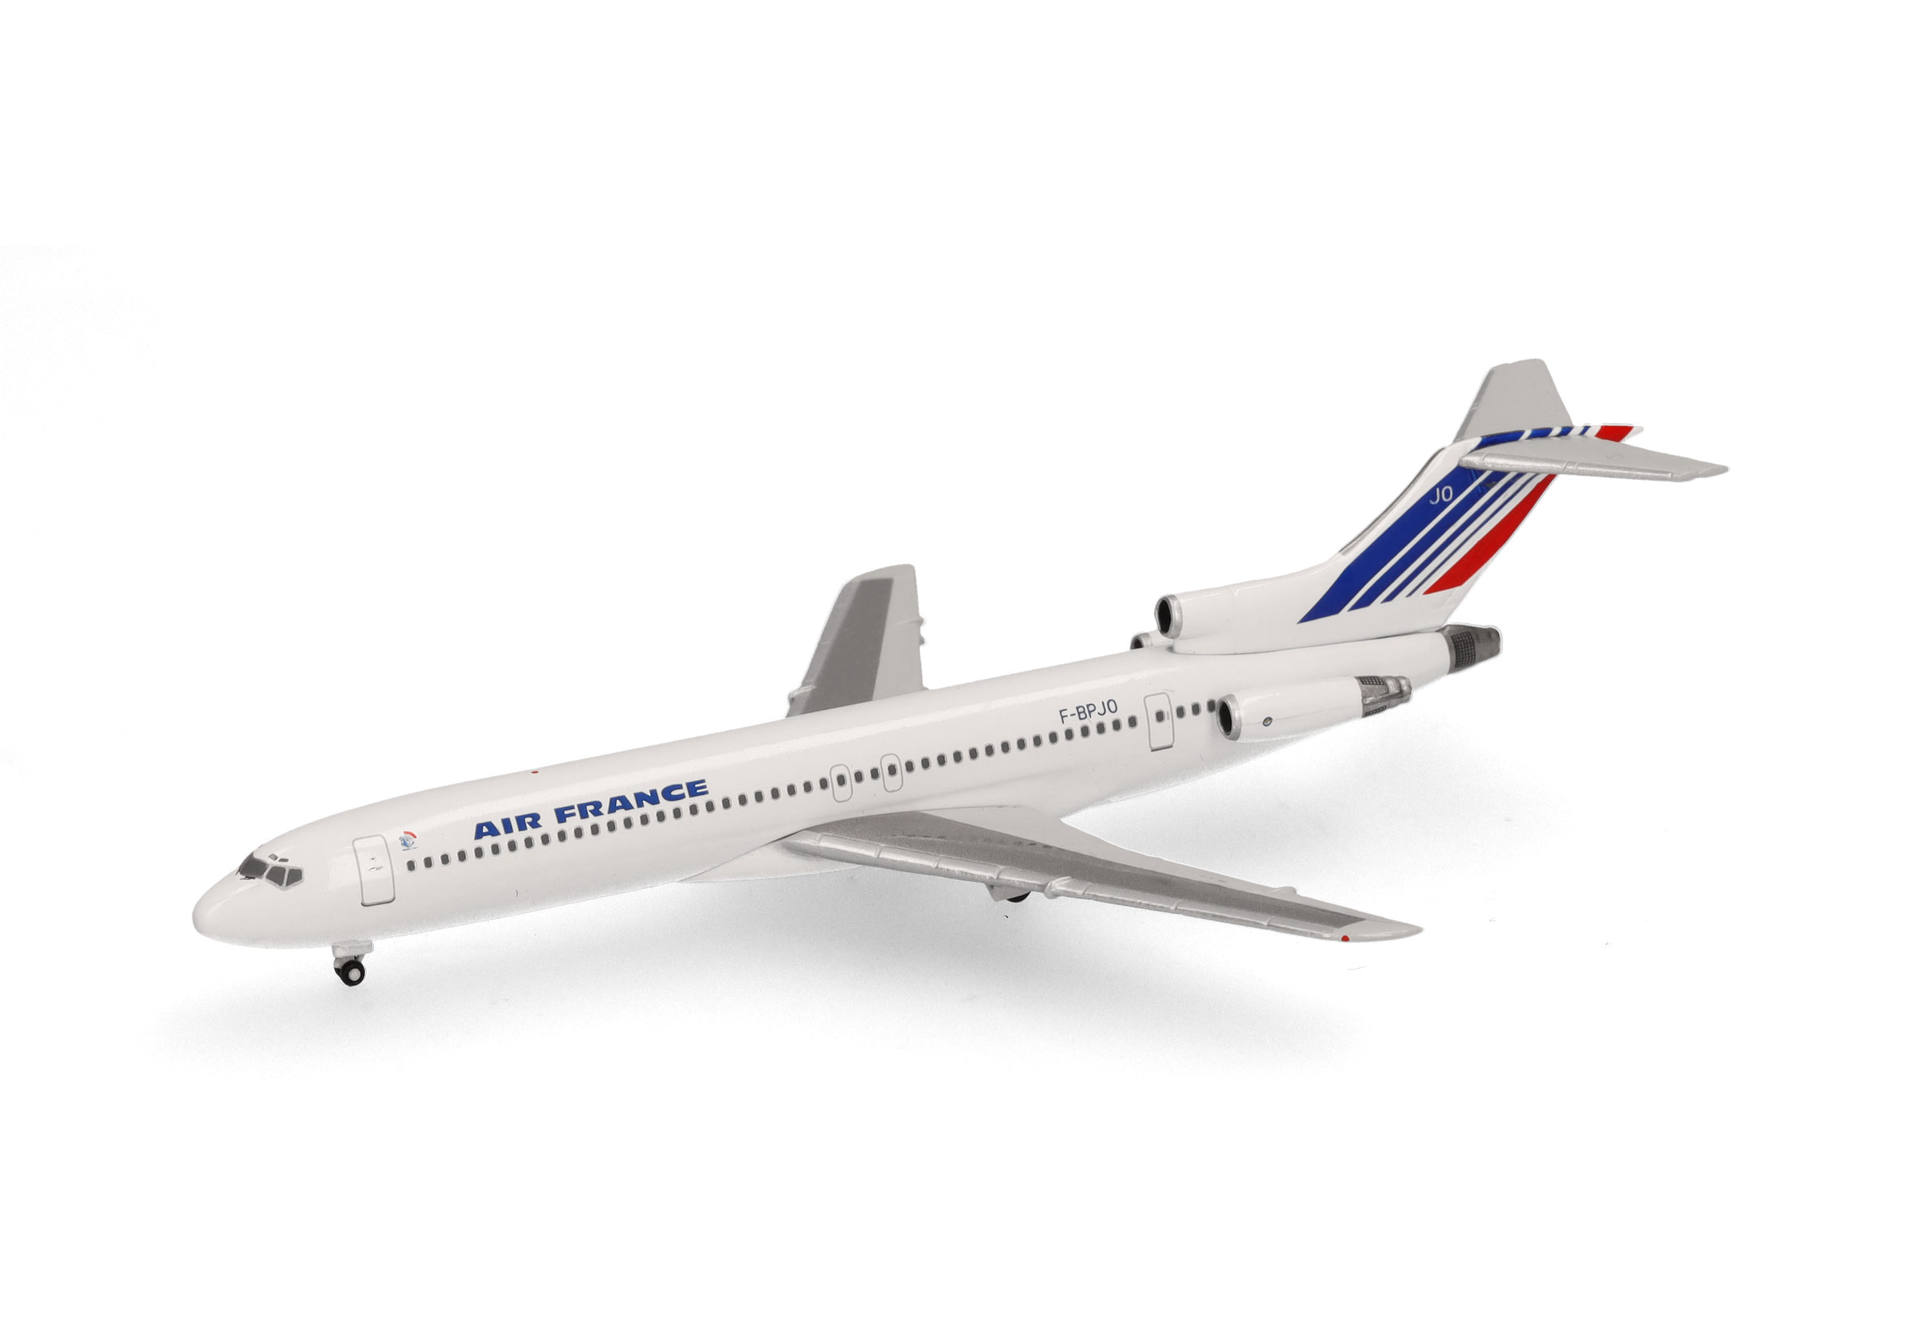 Air France Boeing 727-200 – F-BPJO